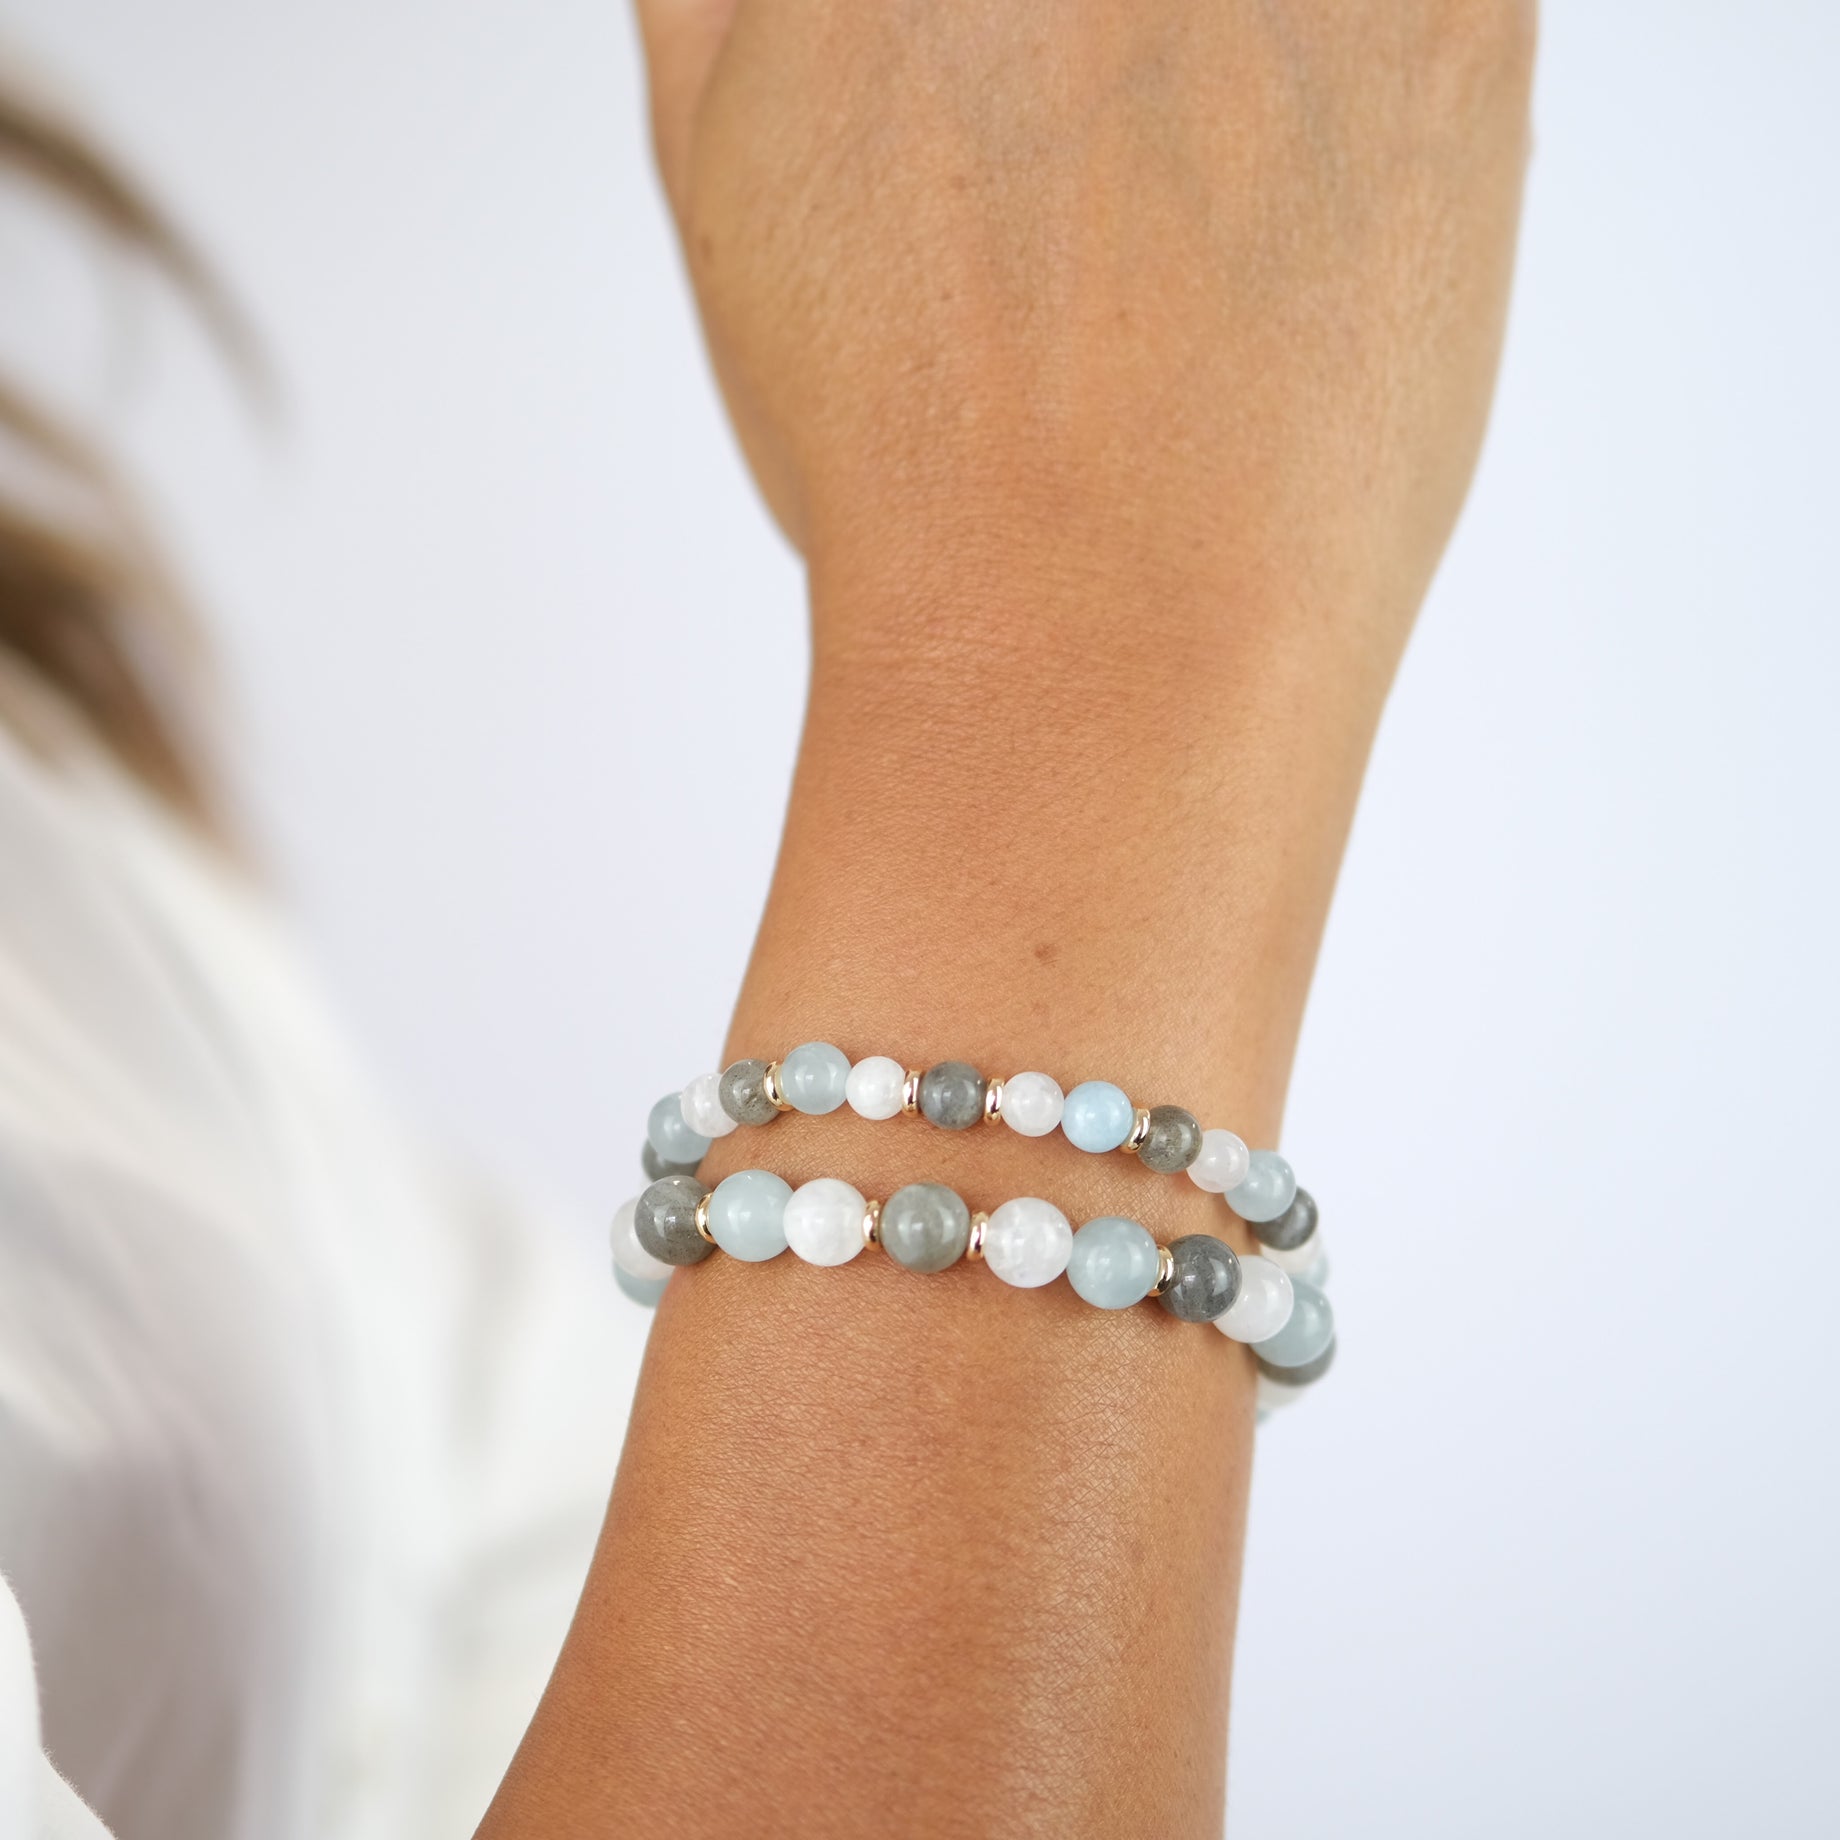 Moonstone E ergy Bracelets by Samayla Jewelleey. 8mm & 6mm gemstone bracelets. Moonstone Magic energies. Picture shows on wrist